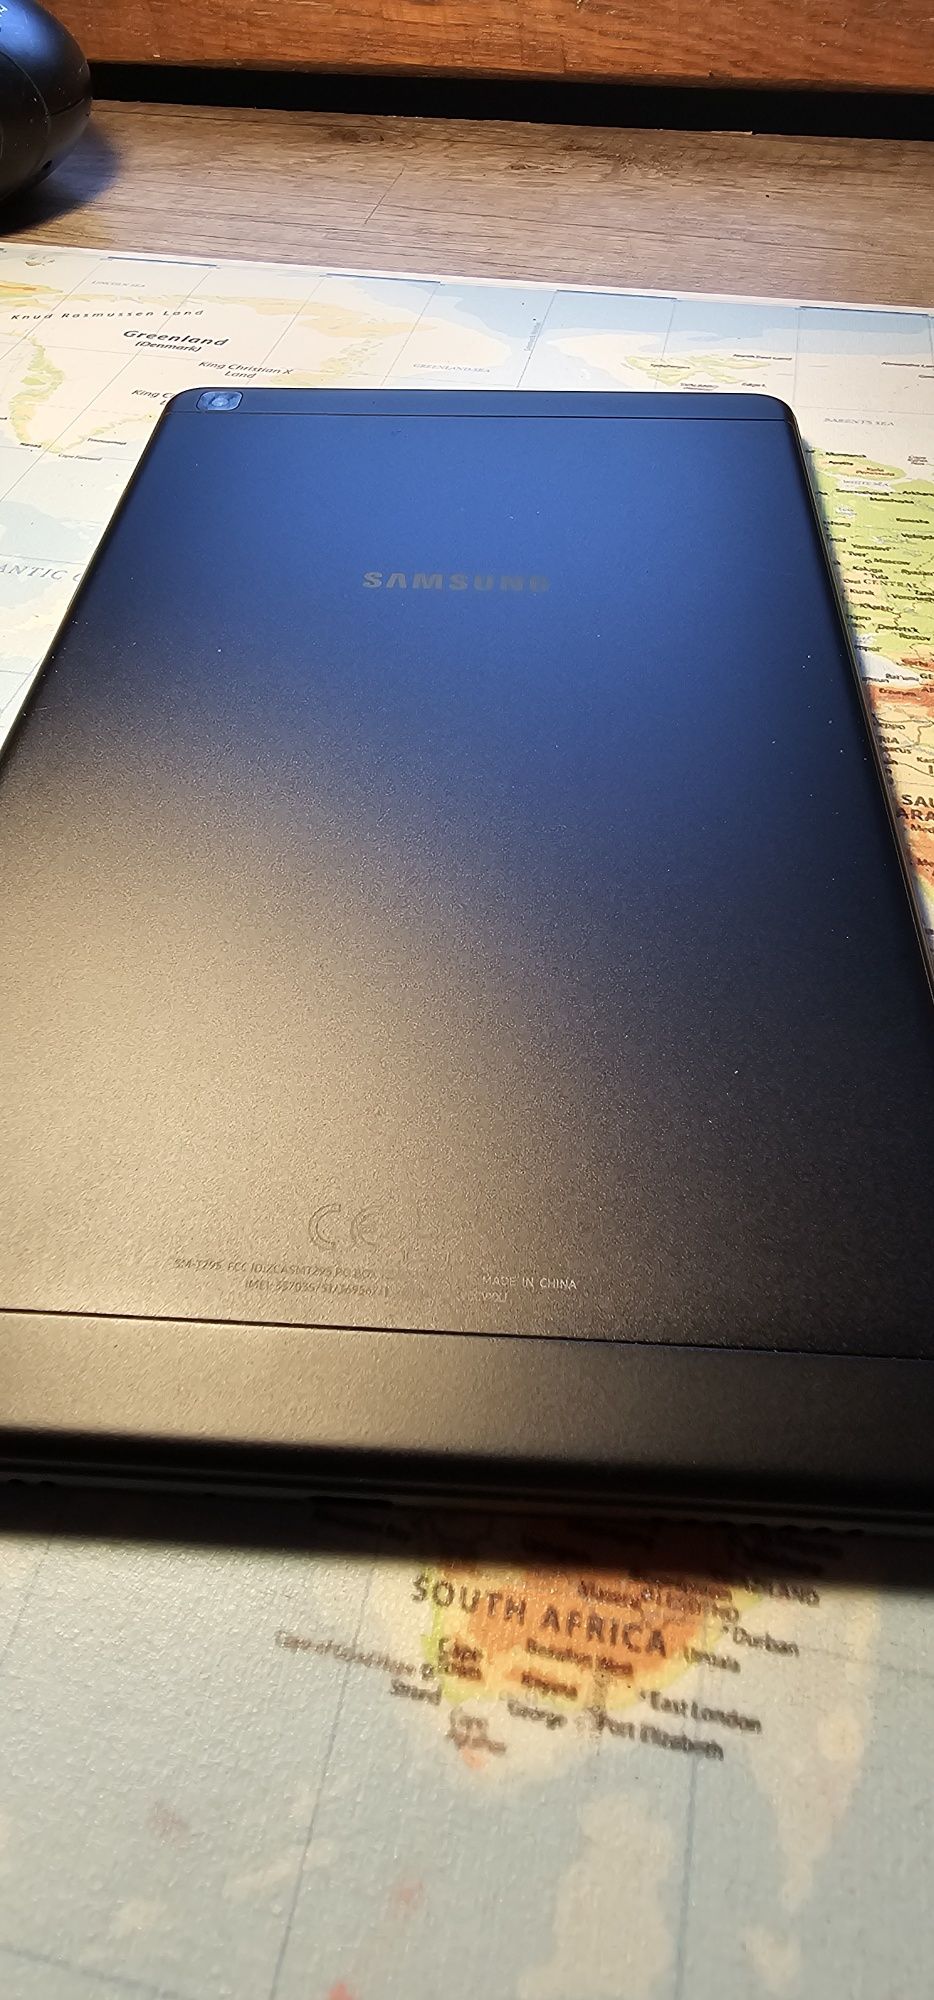 Tablet Samsung Tab A sm-t295